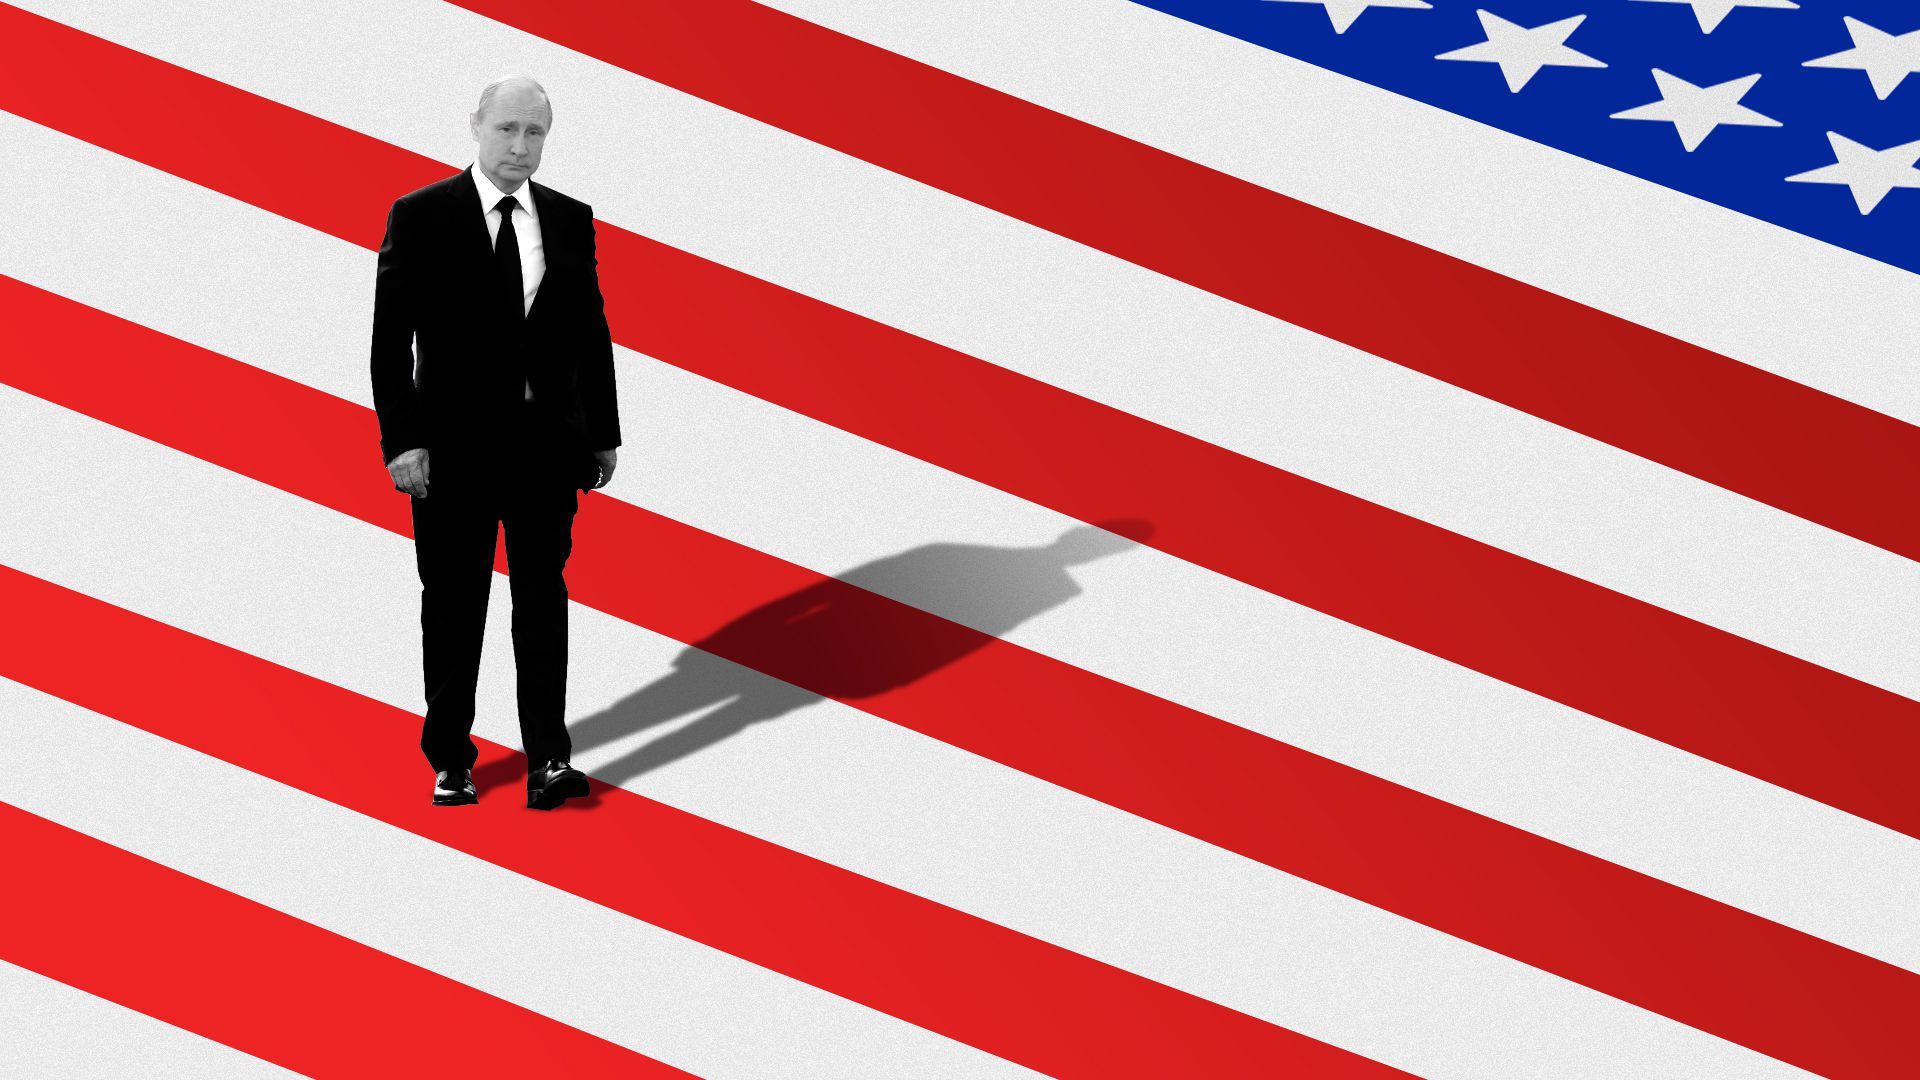 Illustration of Vladimir Putin casting a long shadow over an American flag